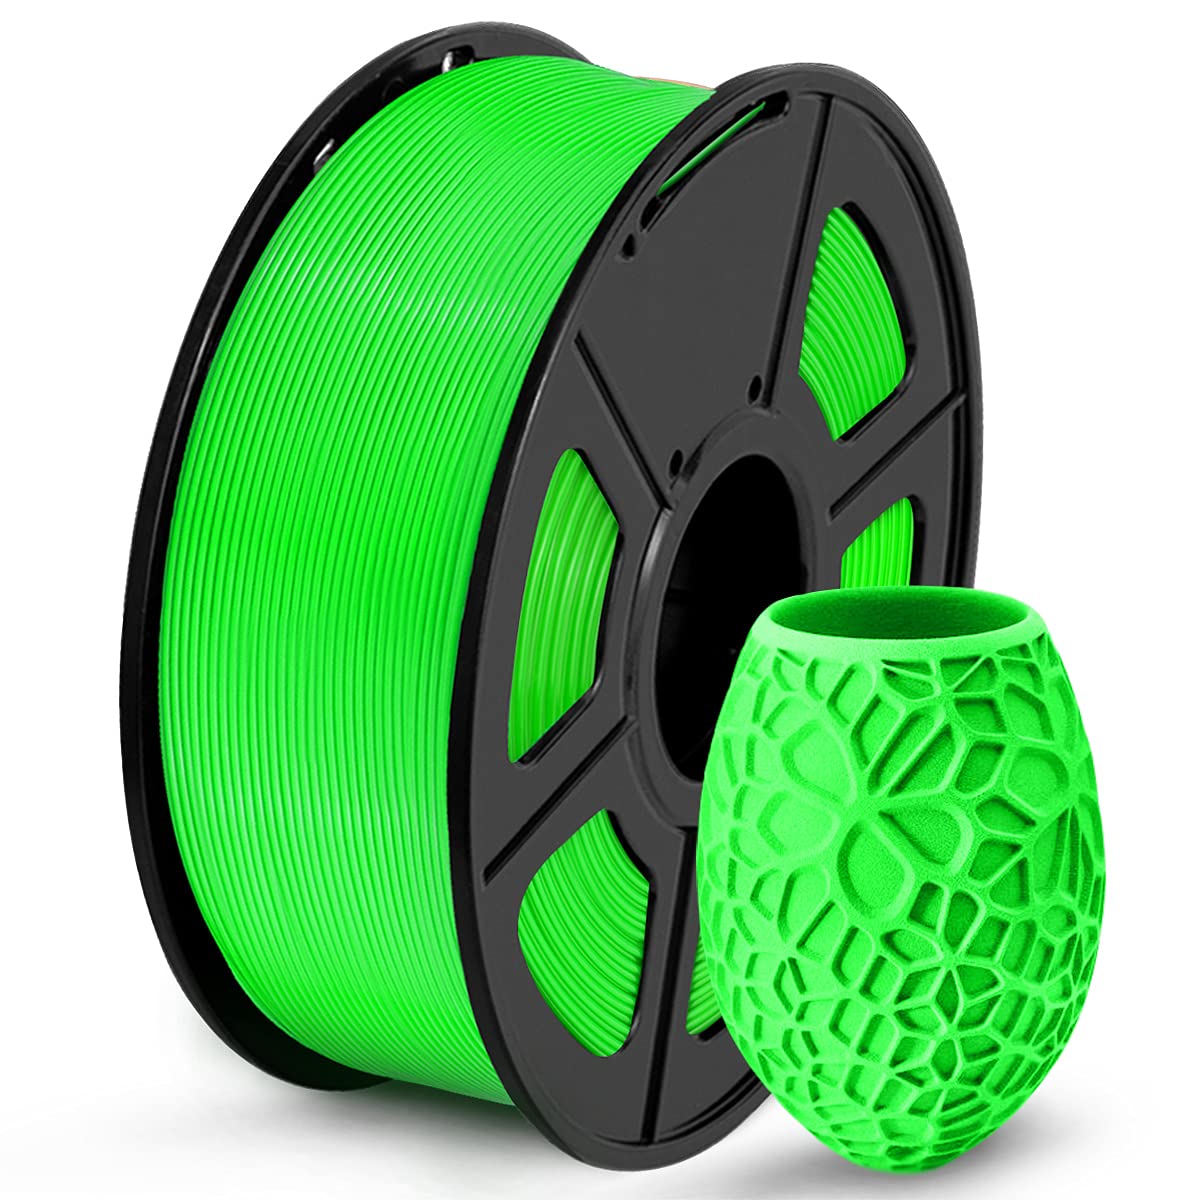 COLOR VERDE SUNLU PLA filamento para impresora 3D, 1,75 PLA, precisión dimensional +/- 0.001 in, bobina de 2.2 lb 0.069 in